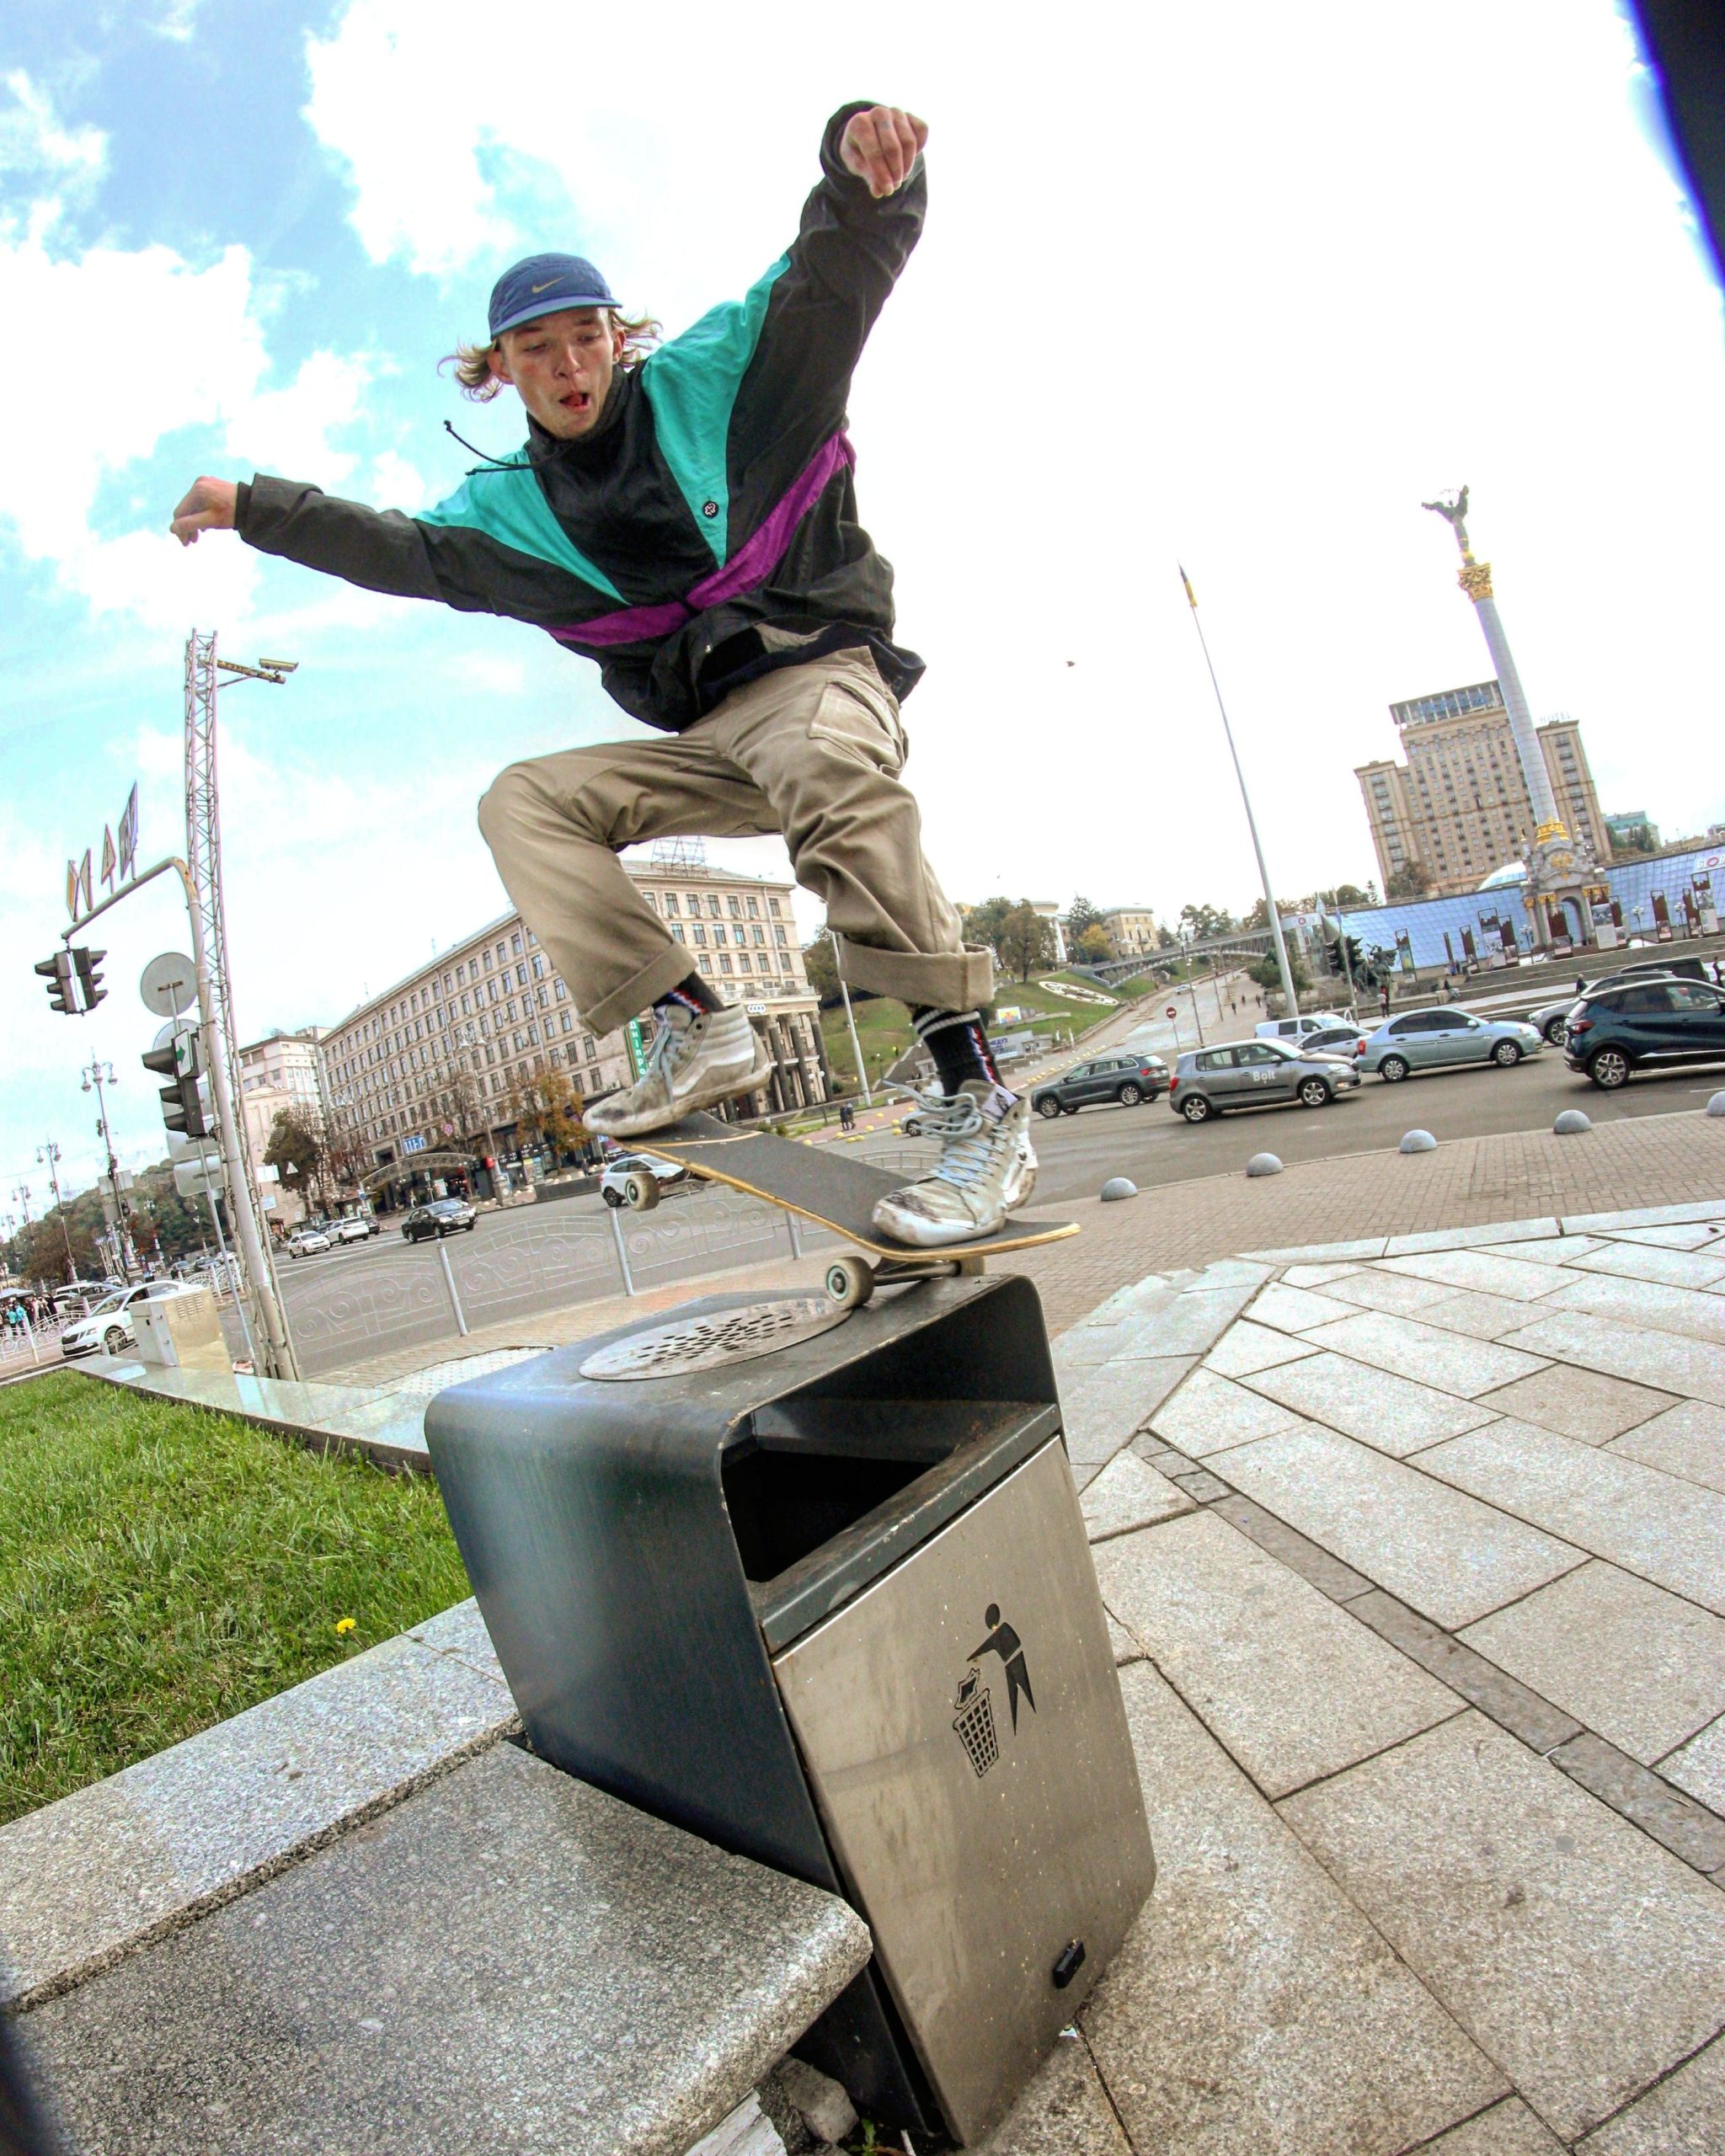 Fs nose grind on the trash box - Vlad Timoshenko, photo by Dmytro Kyrylets